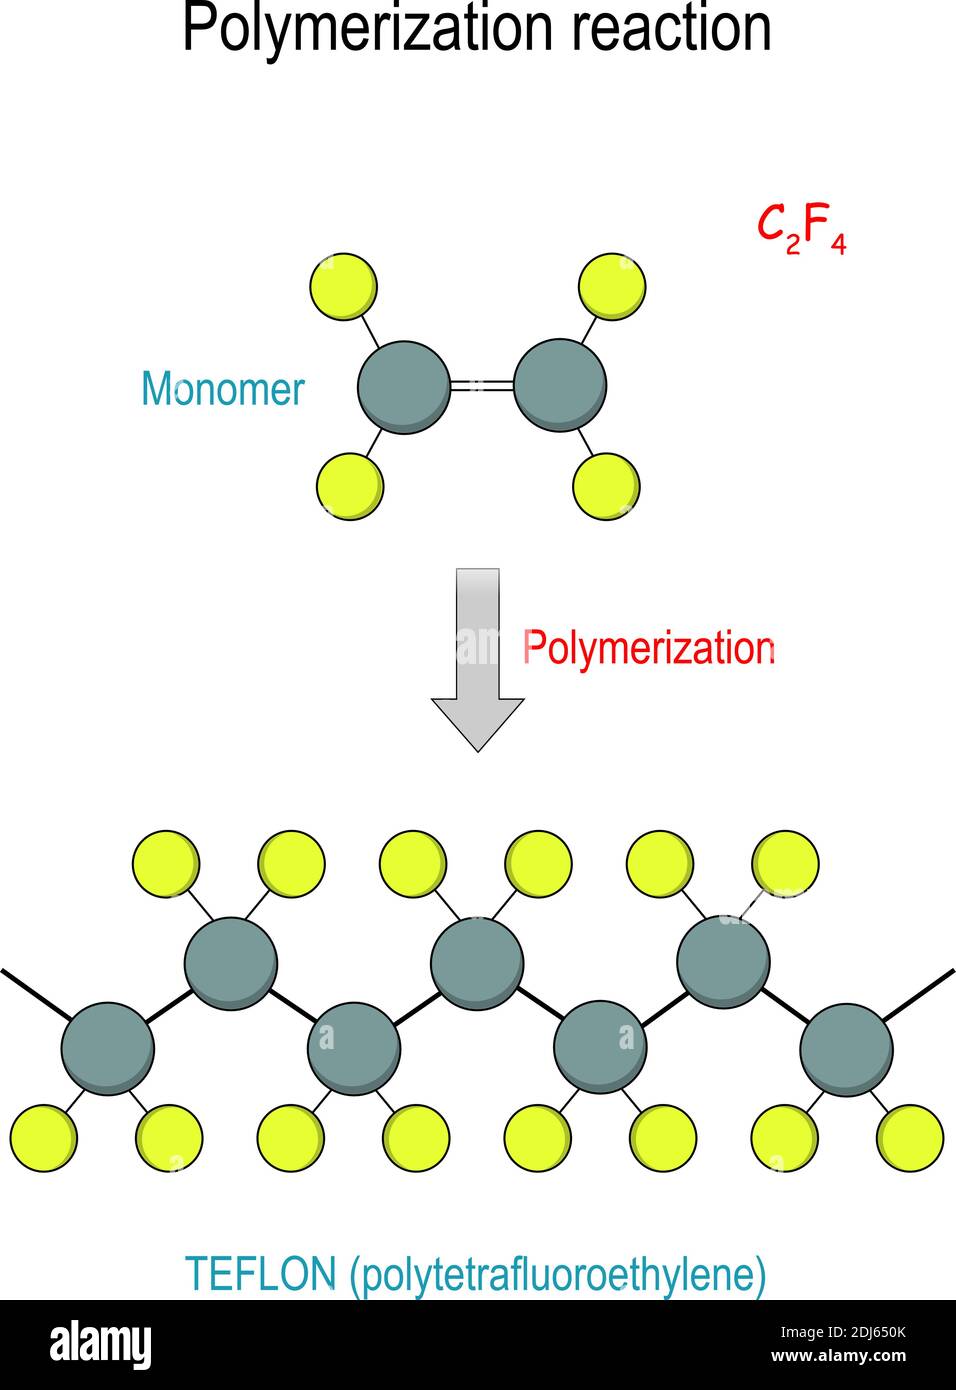 Teflon-Molekül. Chemische Reaktion der Polymerisation. Polytetrafluorethylen. Strukturformel und Modell des Moleküls. C2F4 Vektordiagramm Stock Vektor